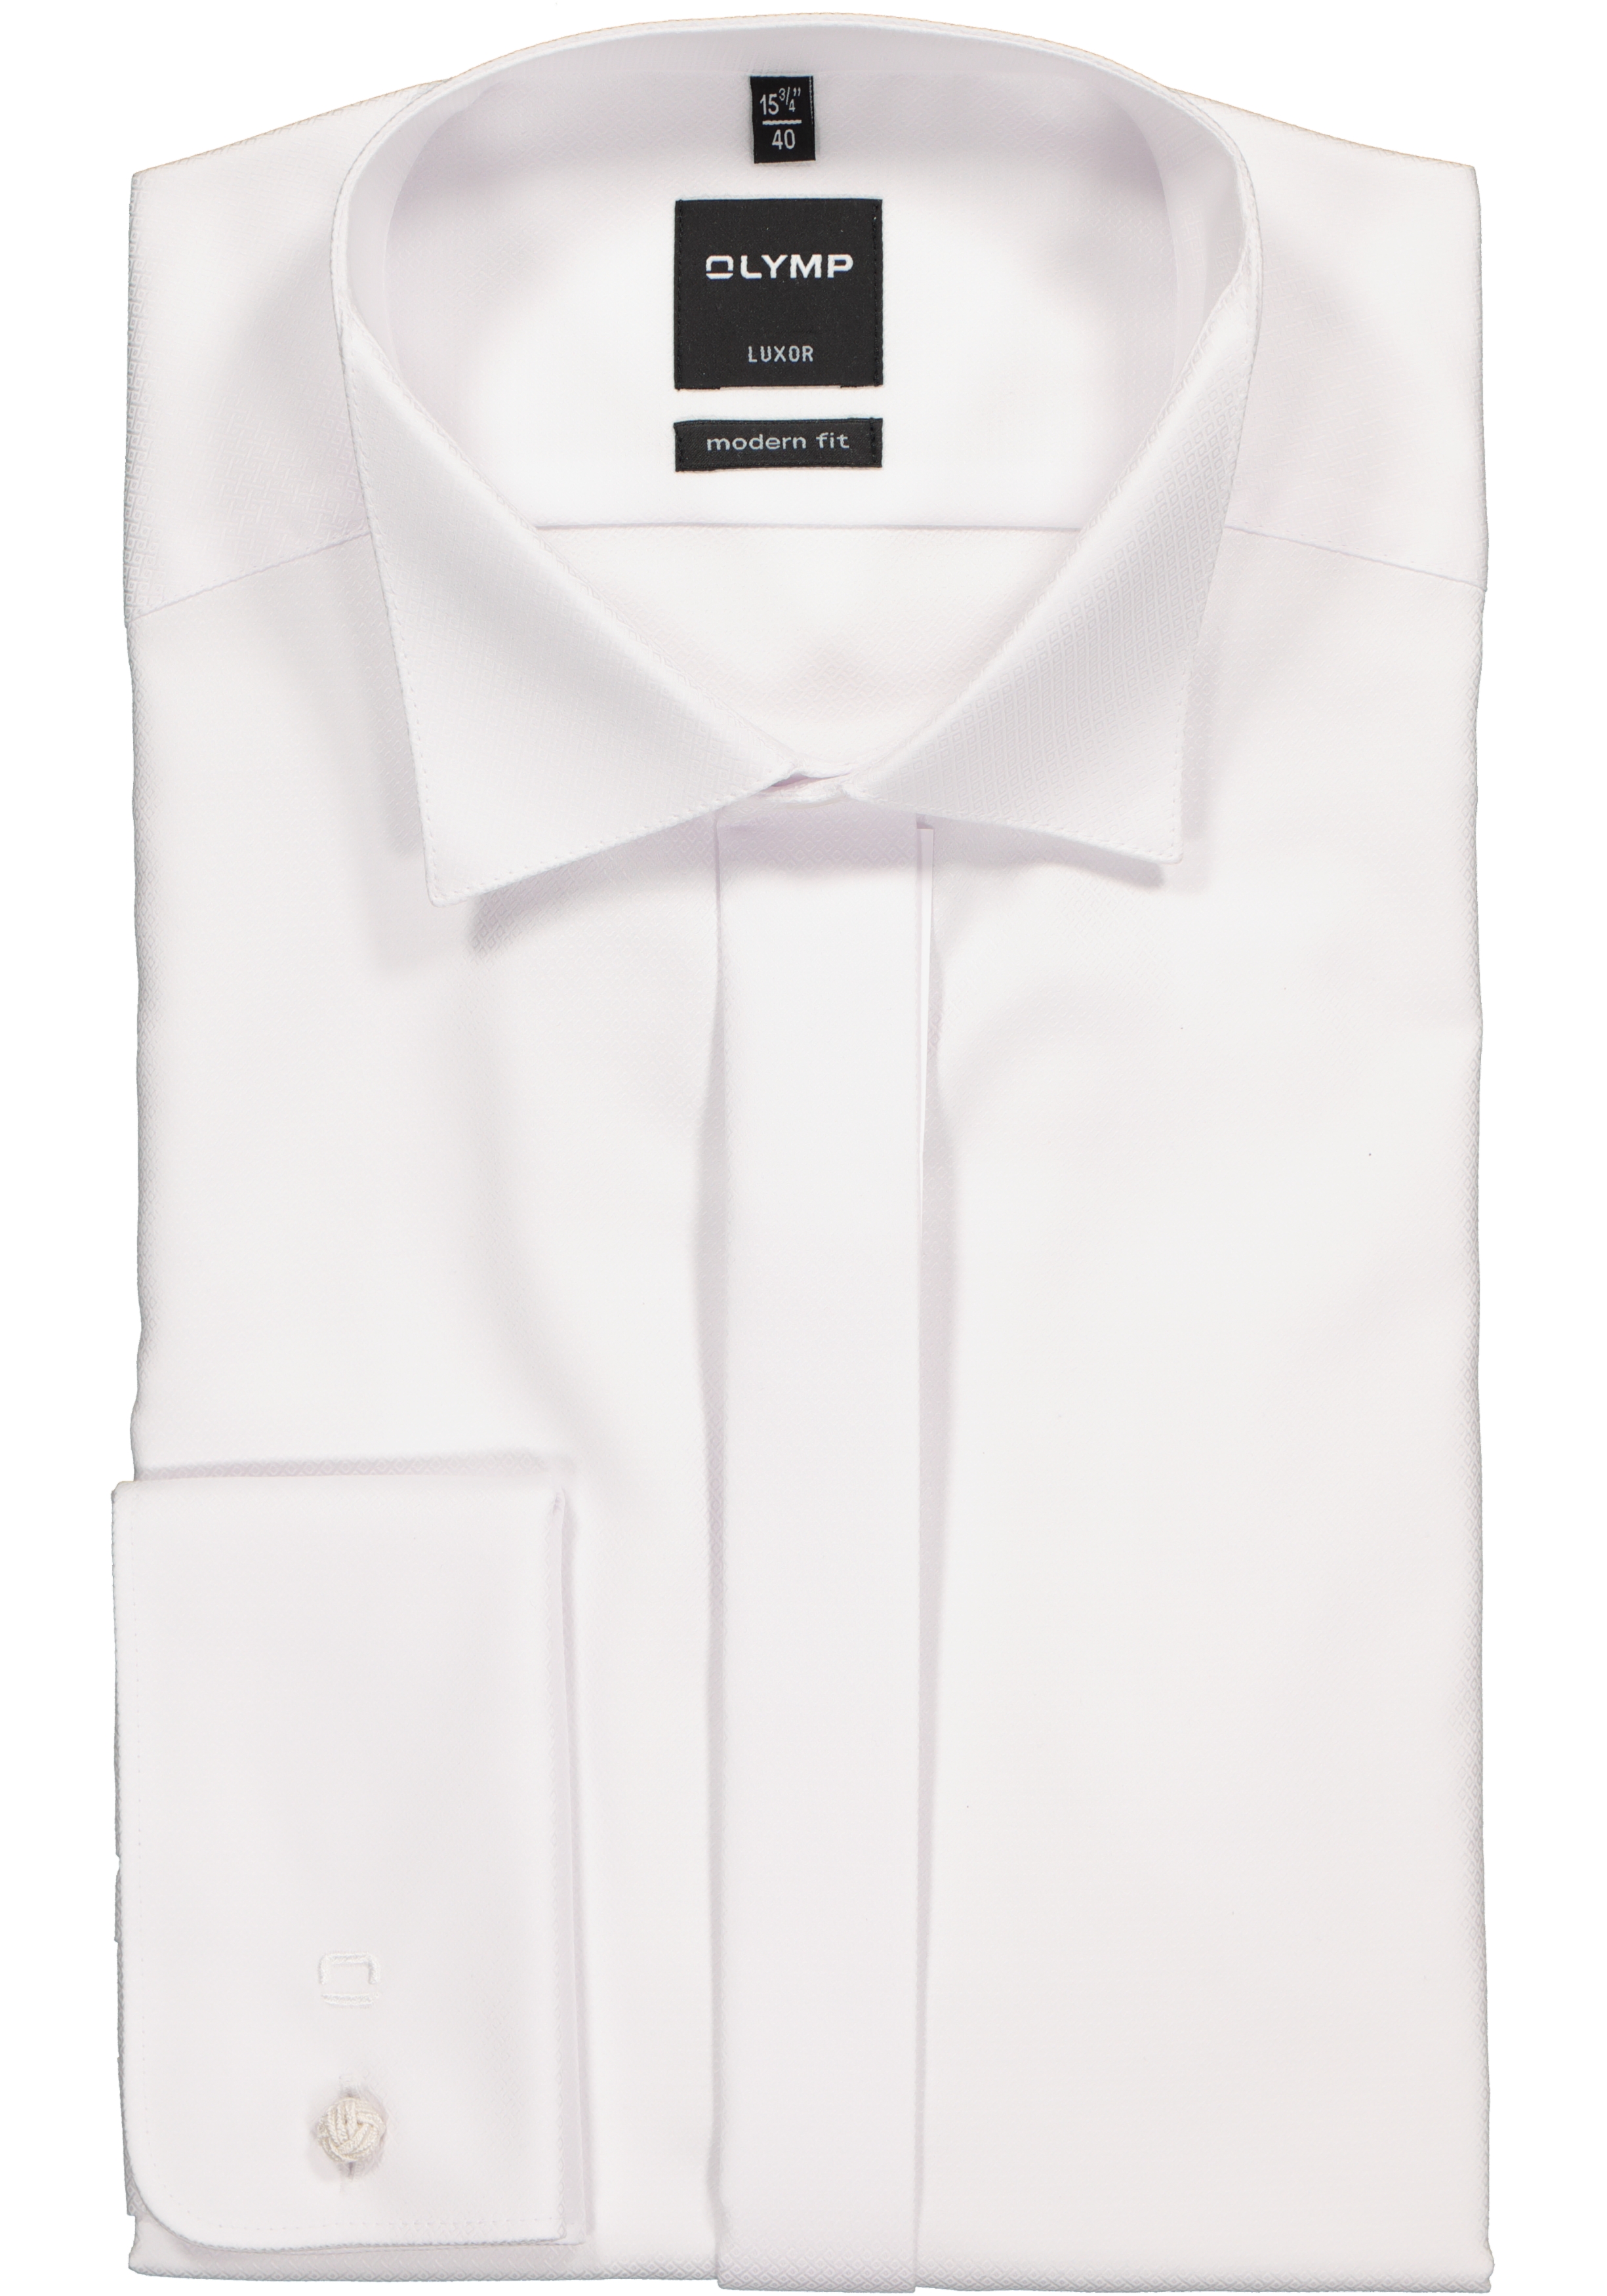 OLYMP Luxor modern fit overhemd, smoking overhemd, wit, structuur stof met een wing kraag